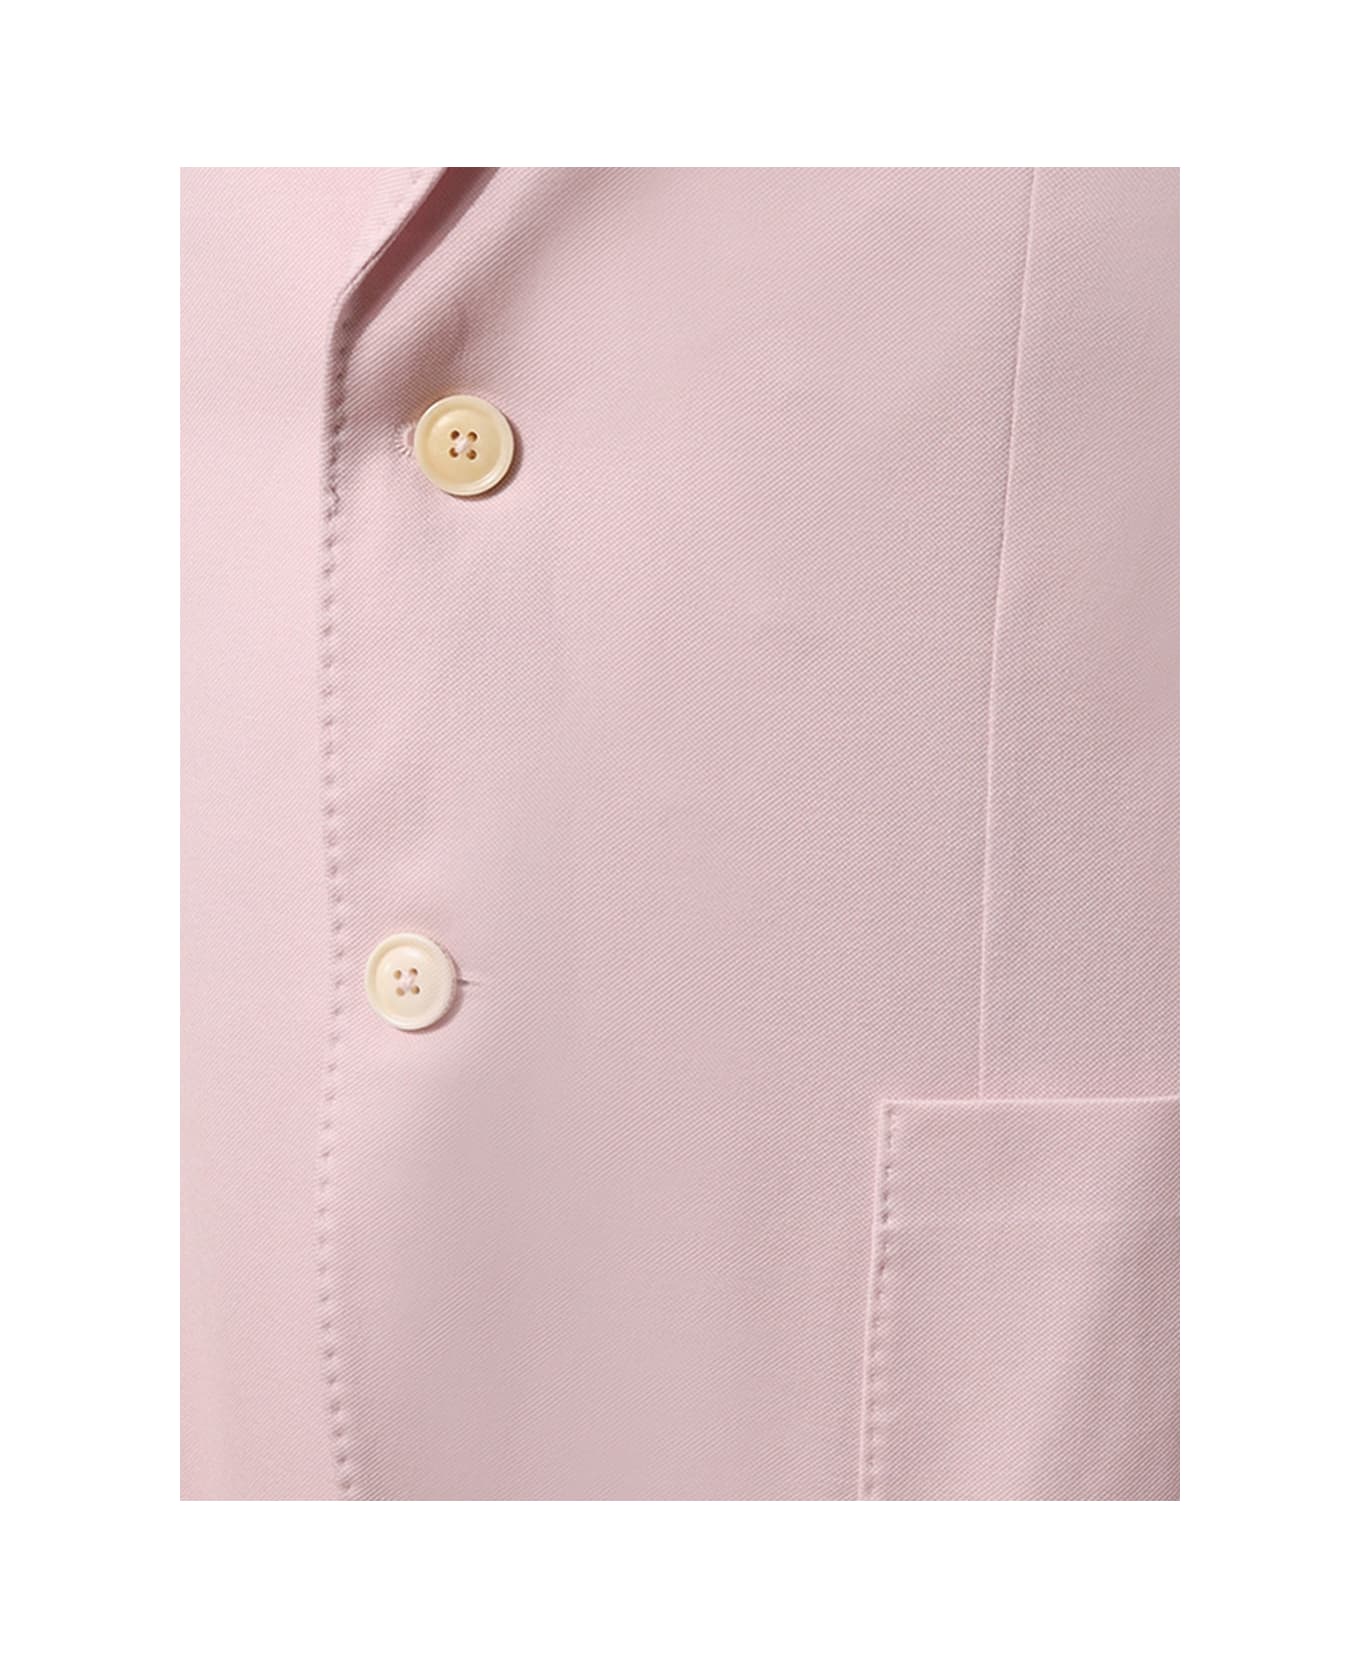 Circolo 1901 Single-breasted Jacket Circolo - Pink